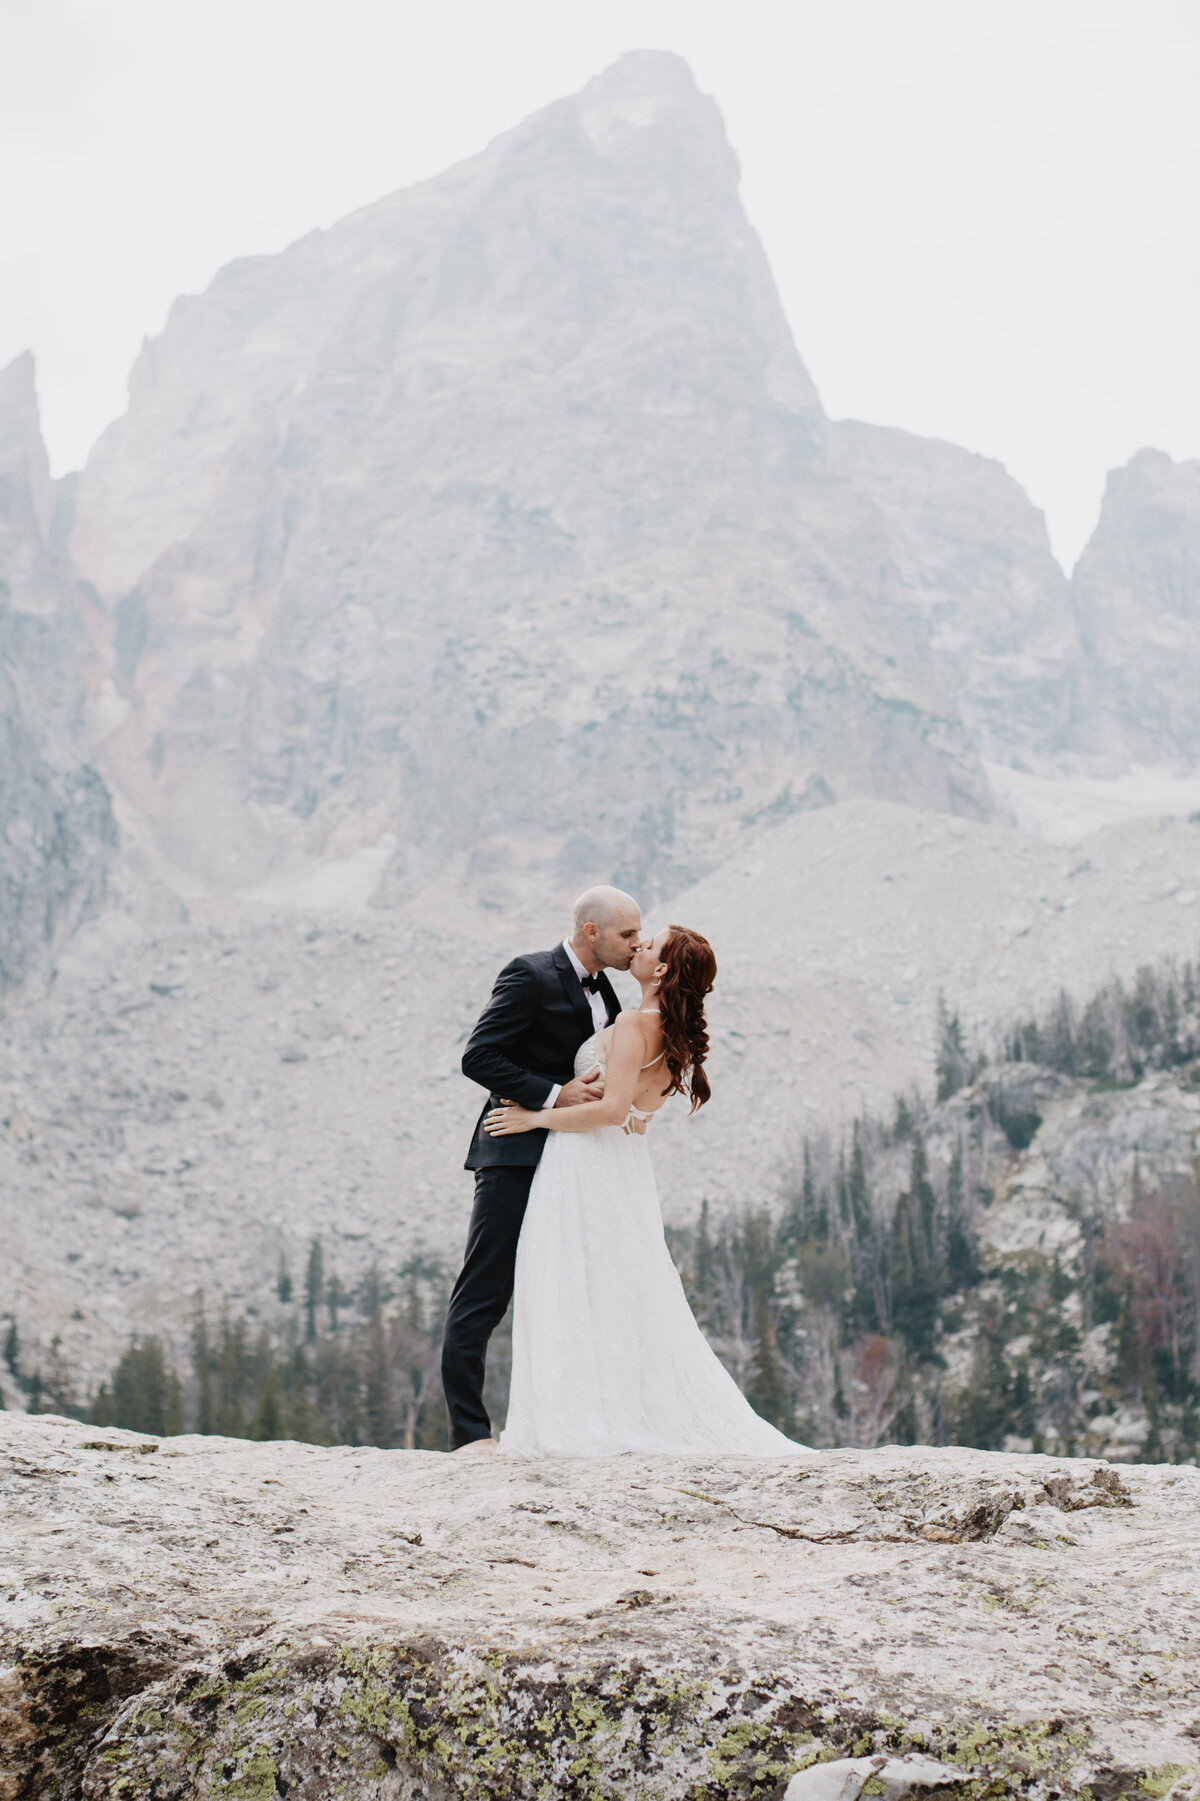 Jackson Hole photographers capture couple kissing as bride and groom